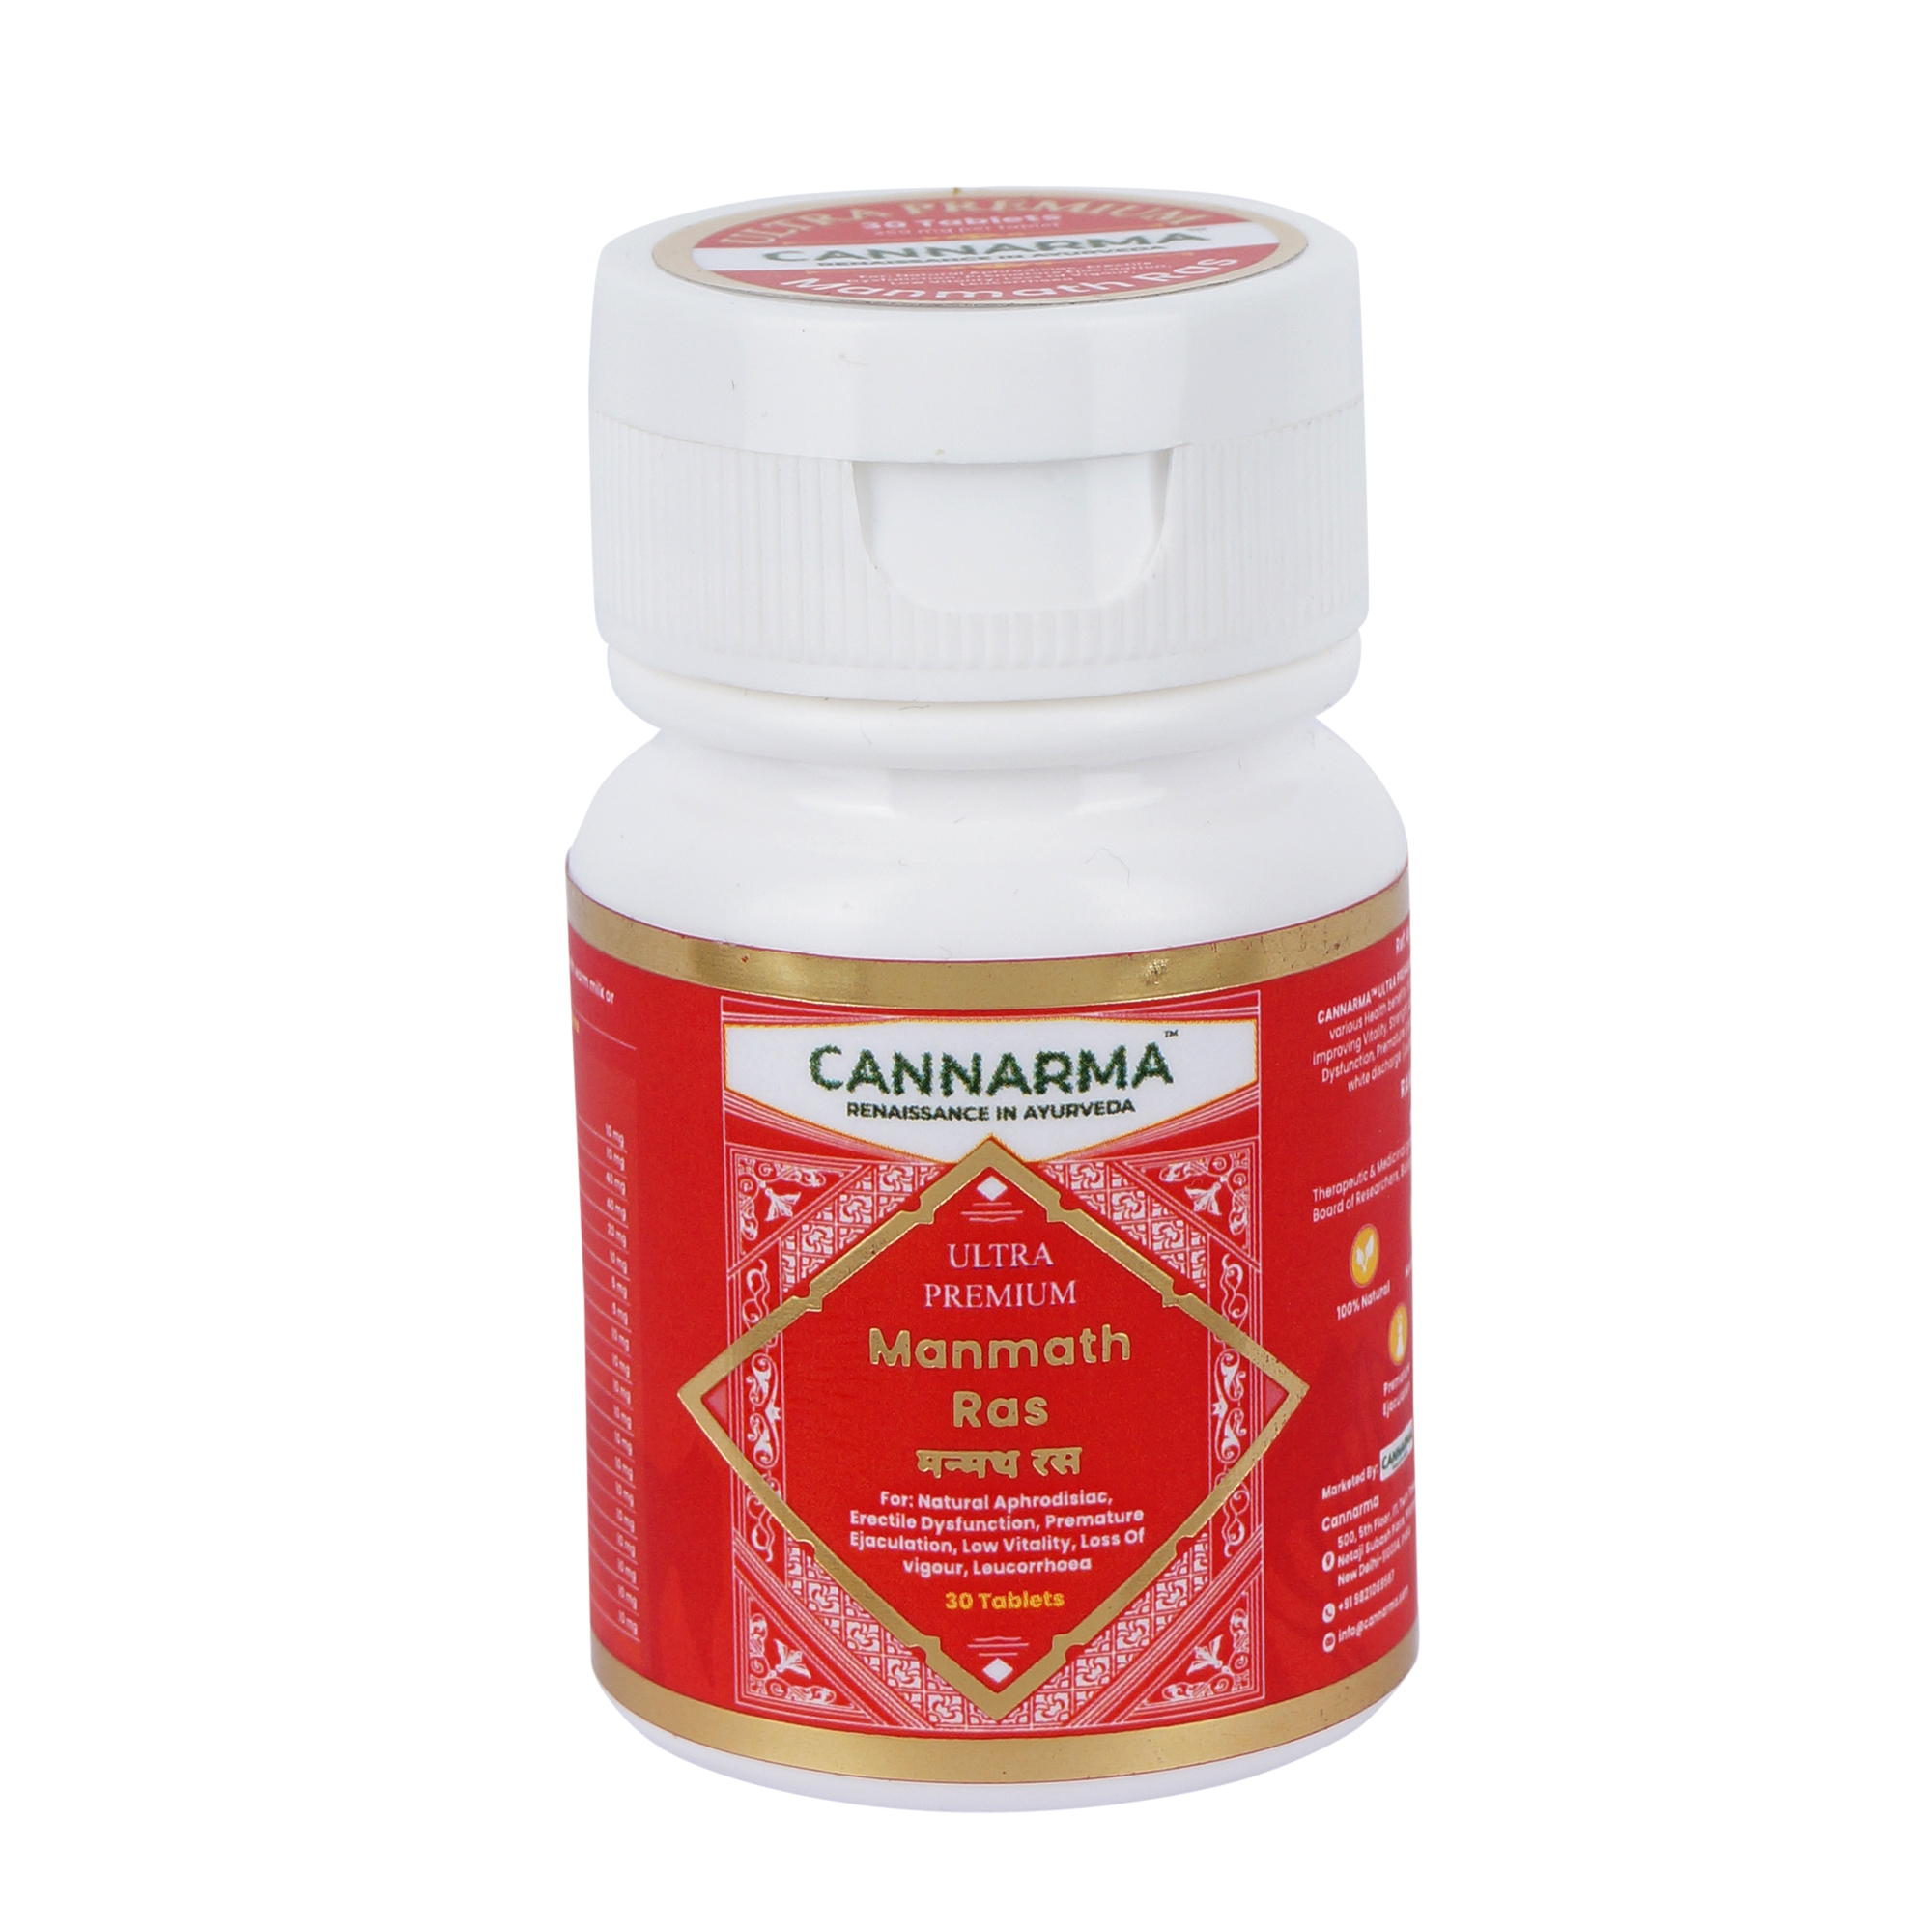 Buy Cannarma Ultra Premium Manmath Ras at Best Price Online